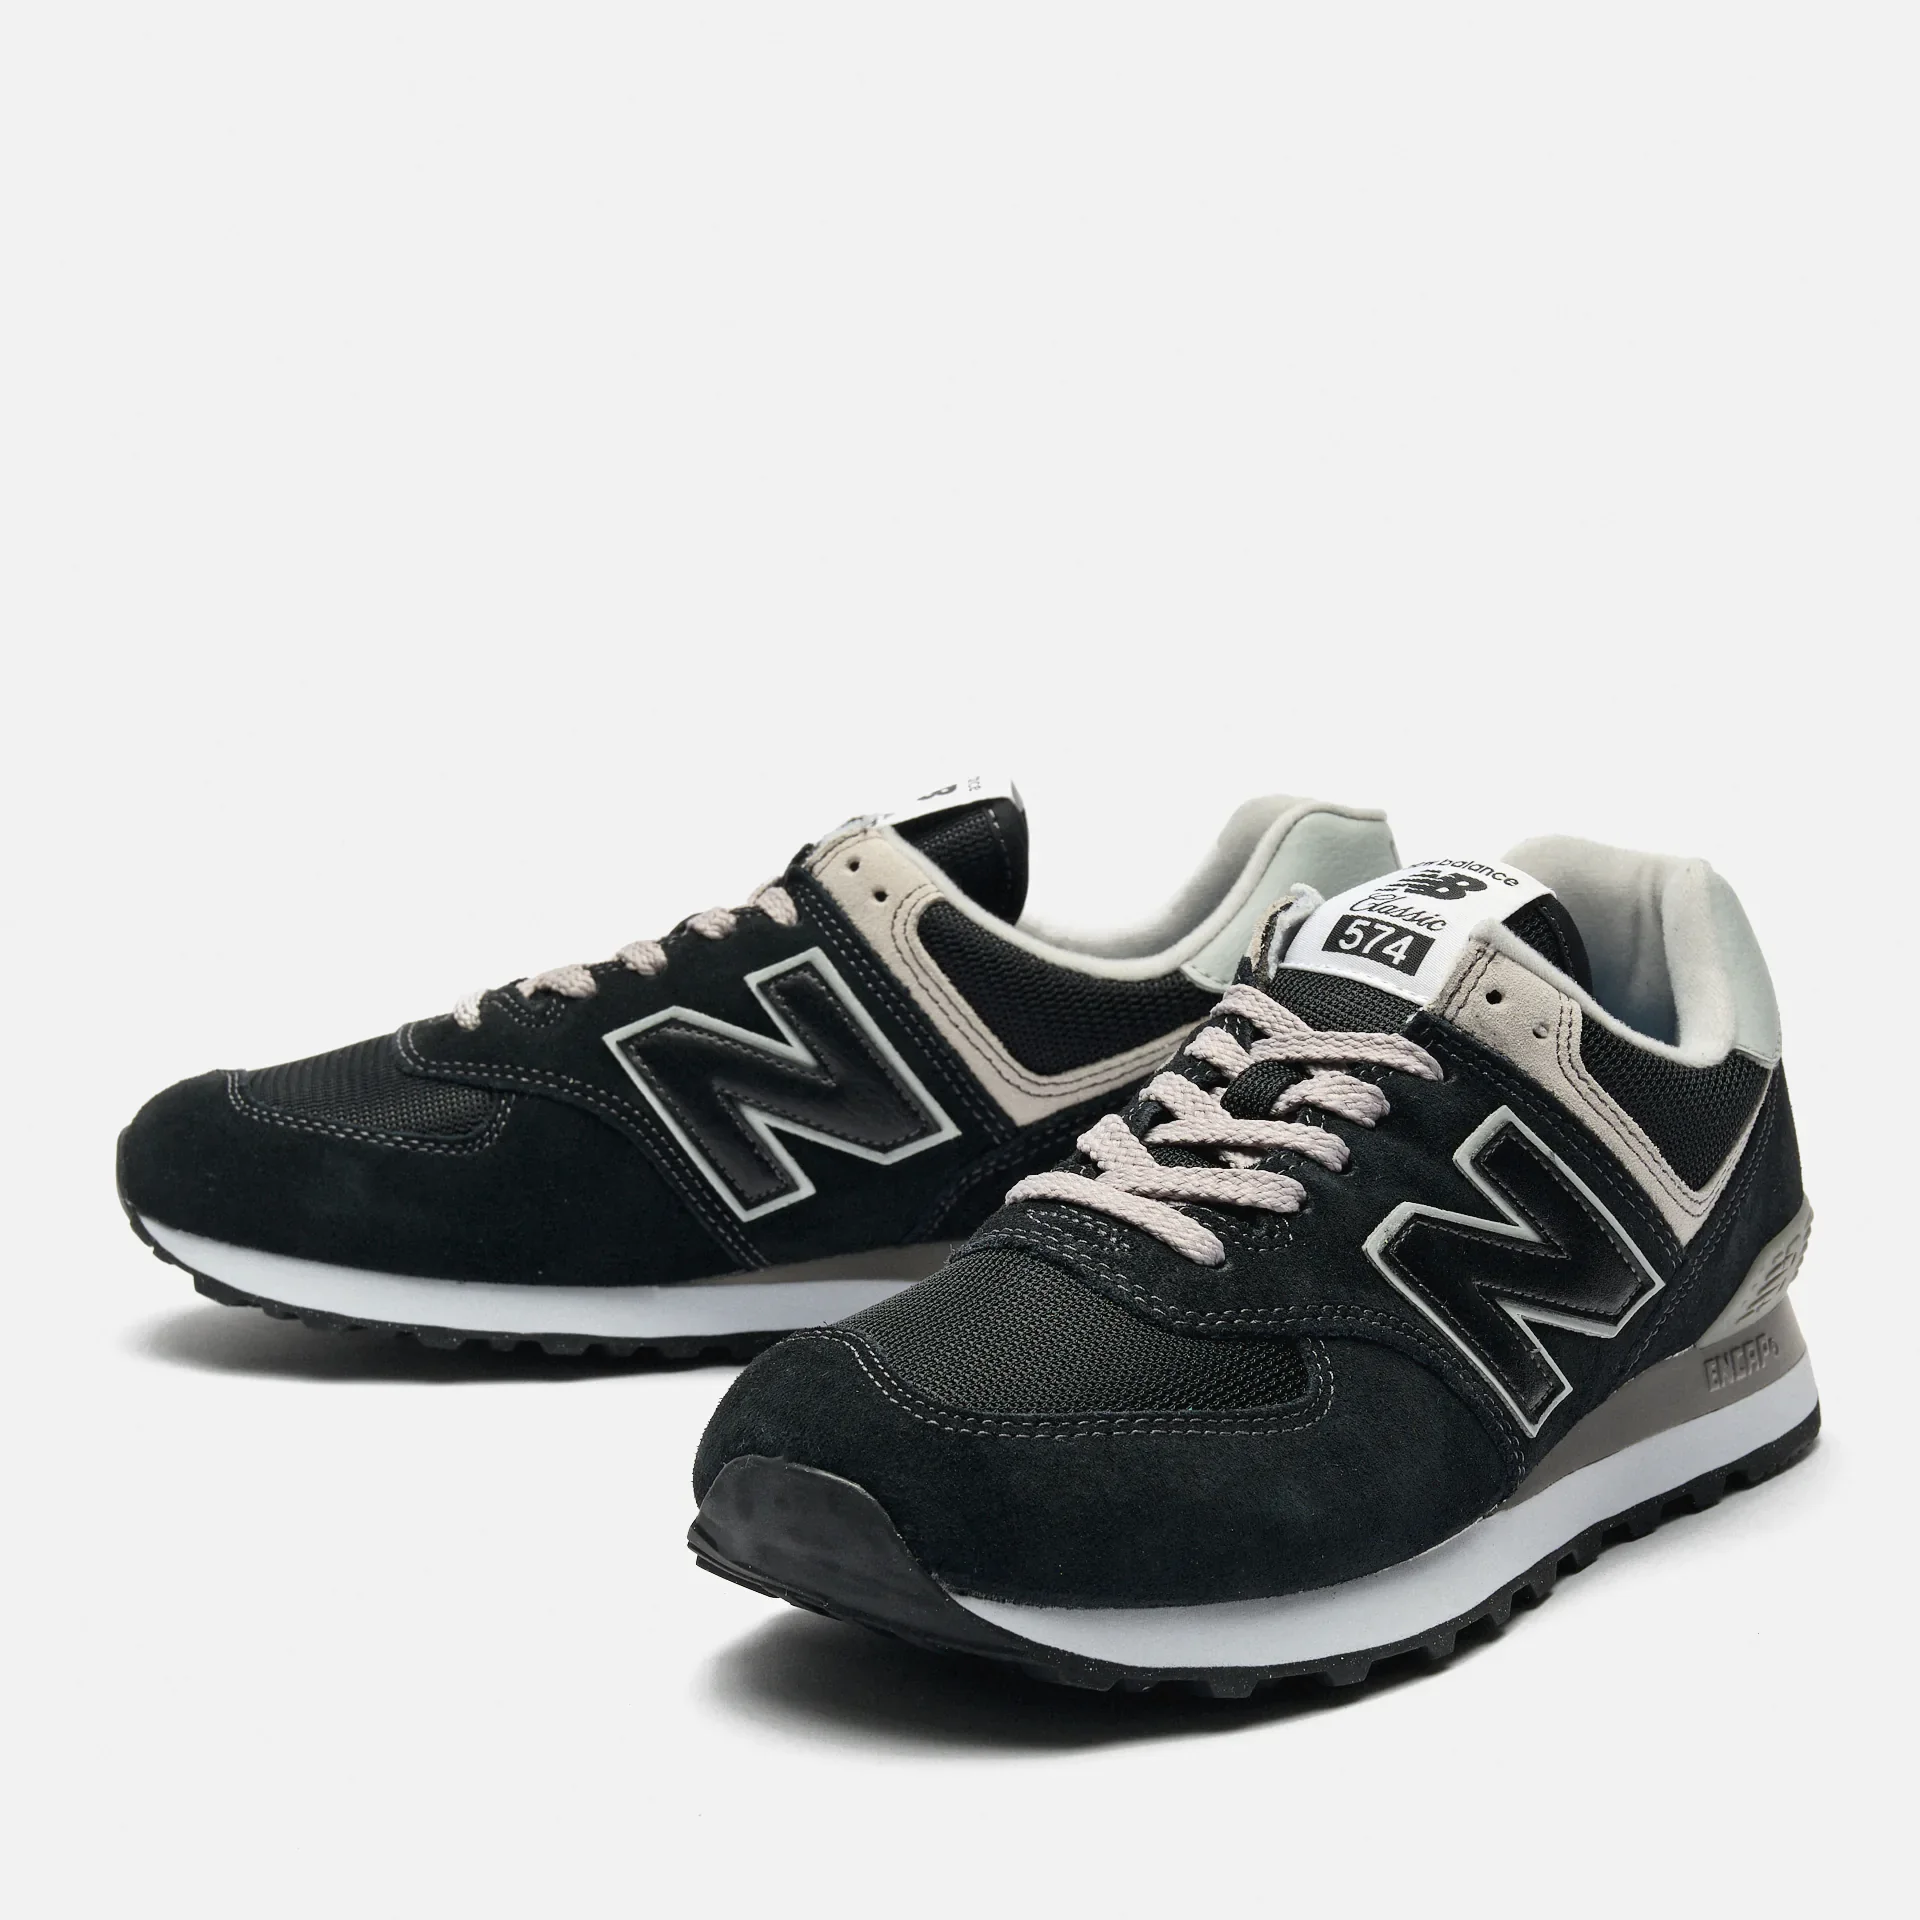 New Balance ML574 Sneaker Black